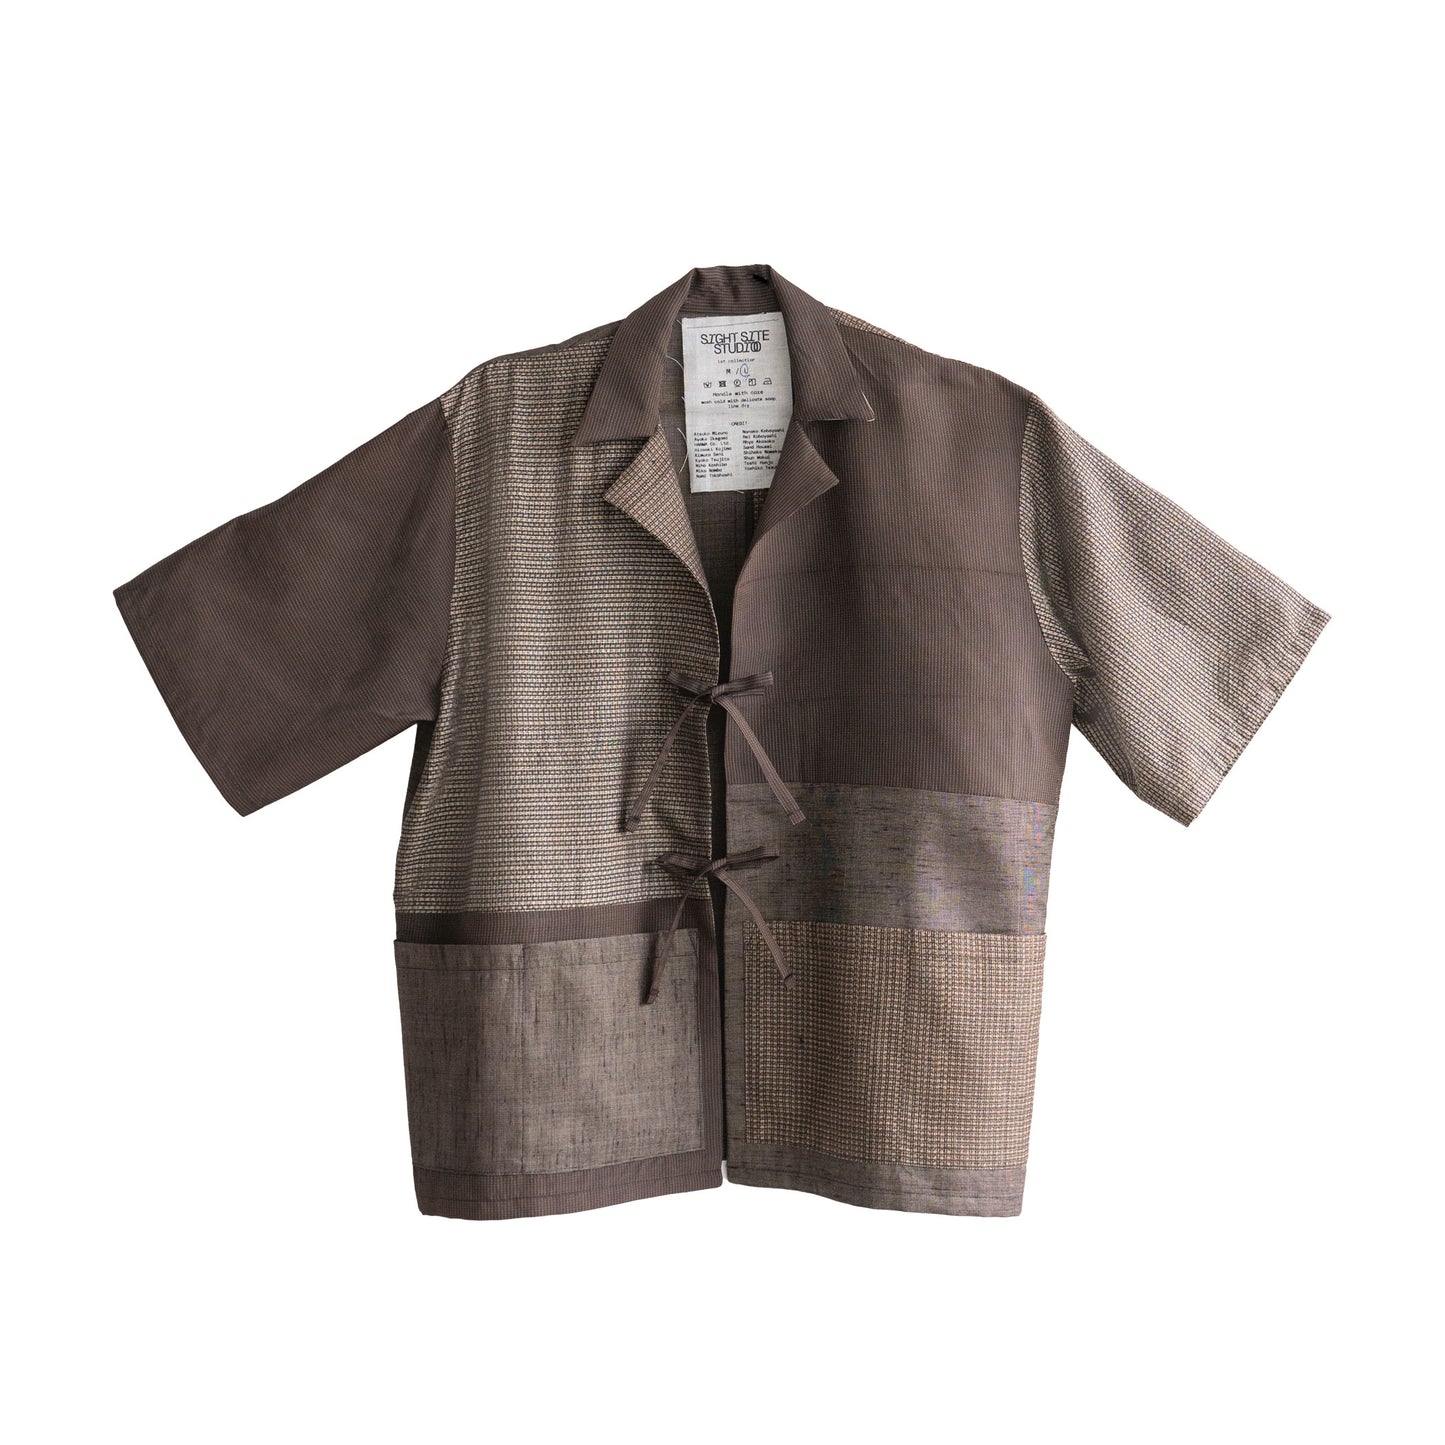 Kimono Working Shirts - Brown 01 L